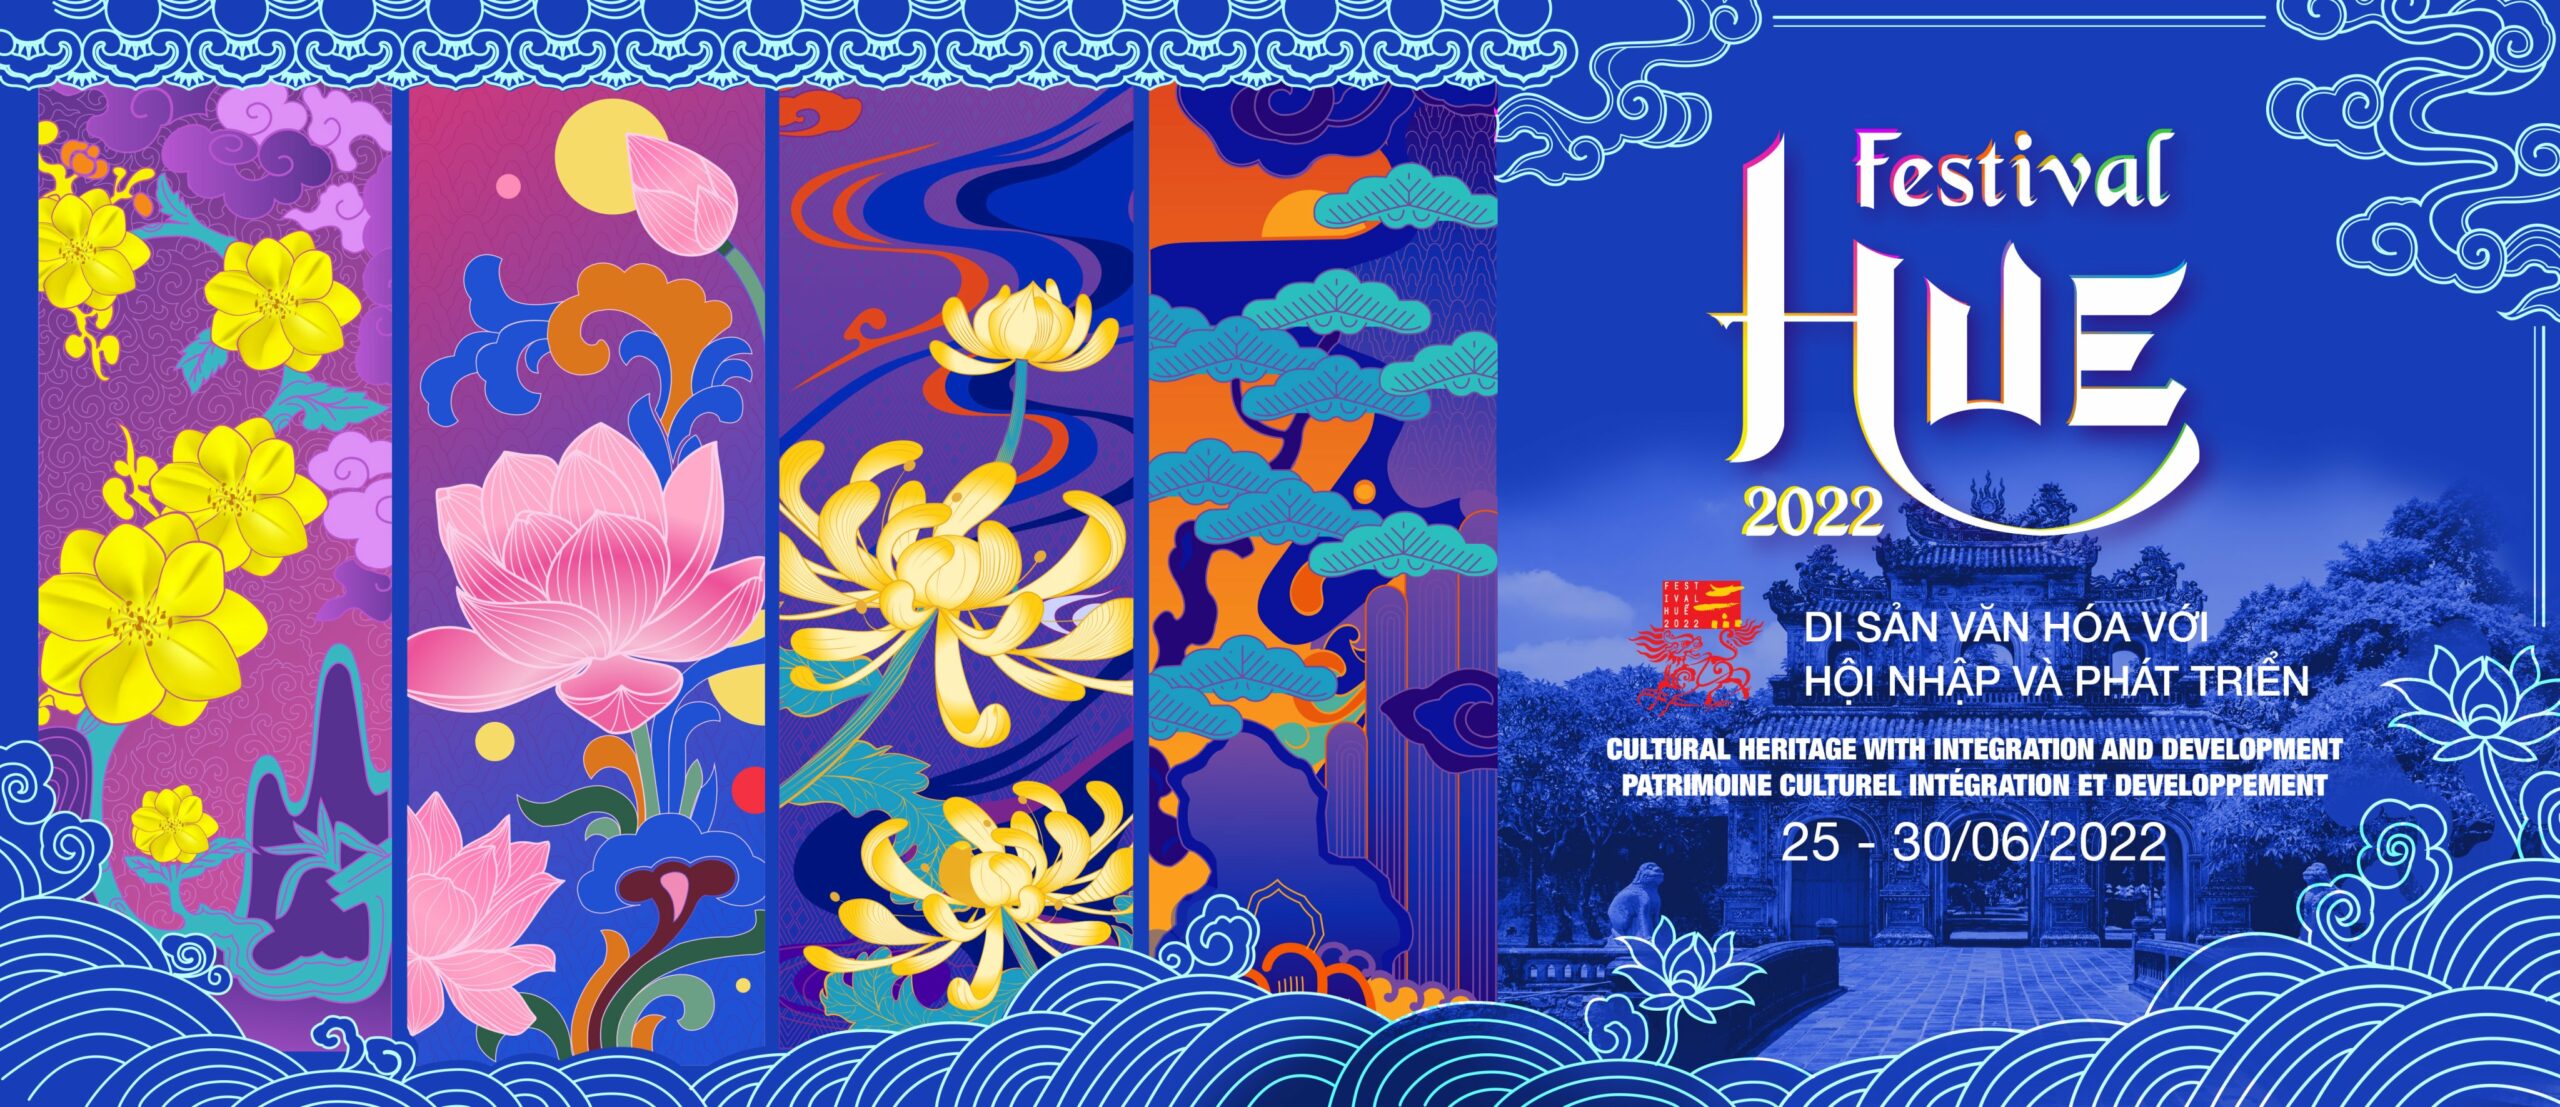 2022 Hue Festival